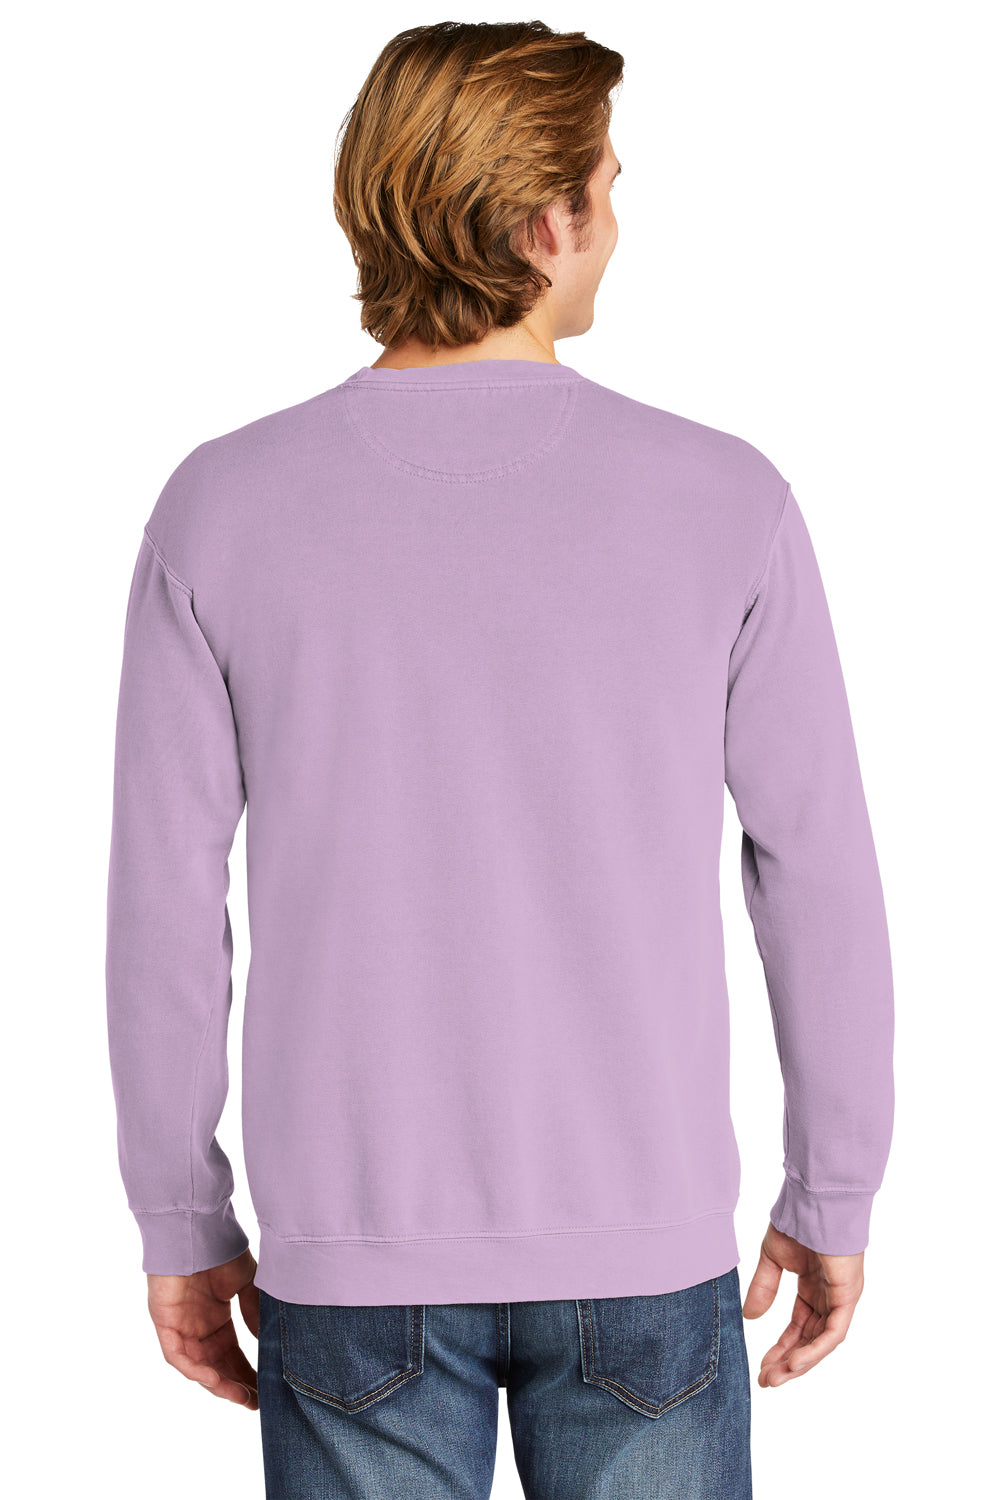 Comfort Colors Mens Crewneck Sweatshirt Orchid Purple Back